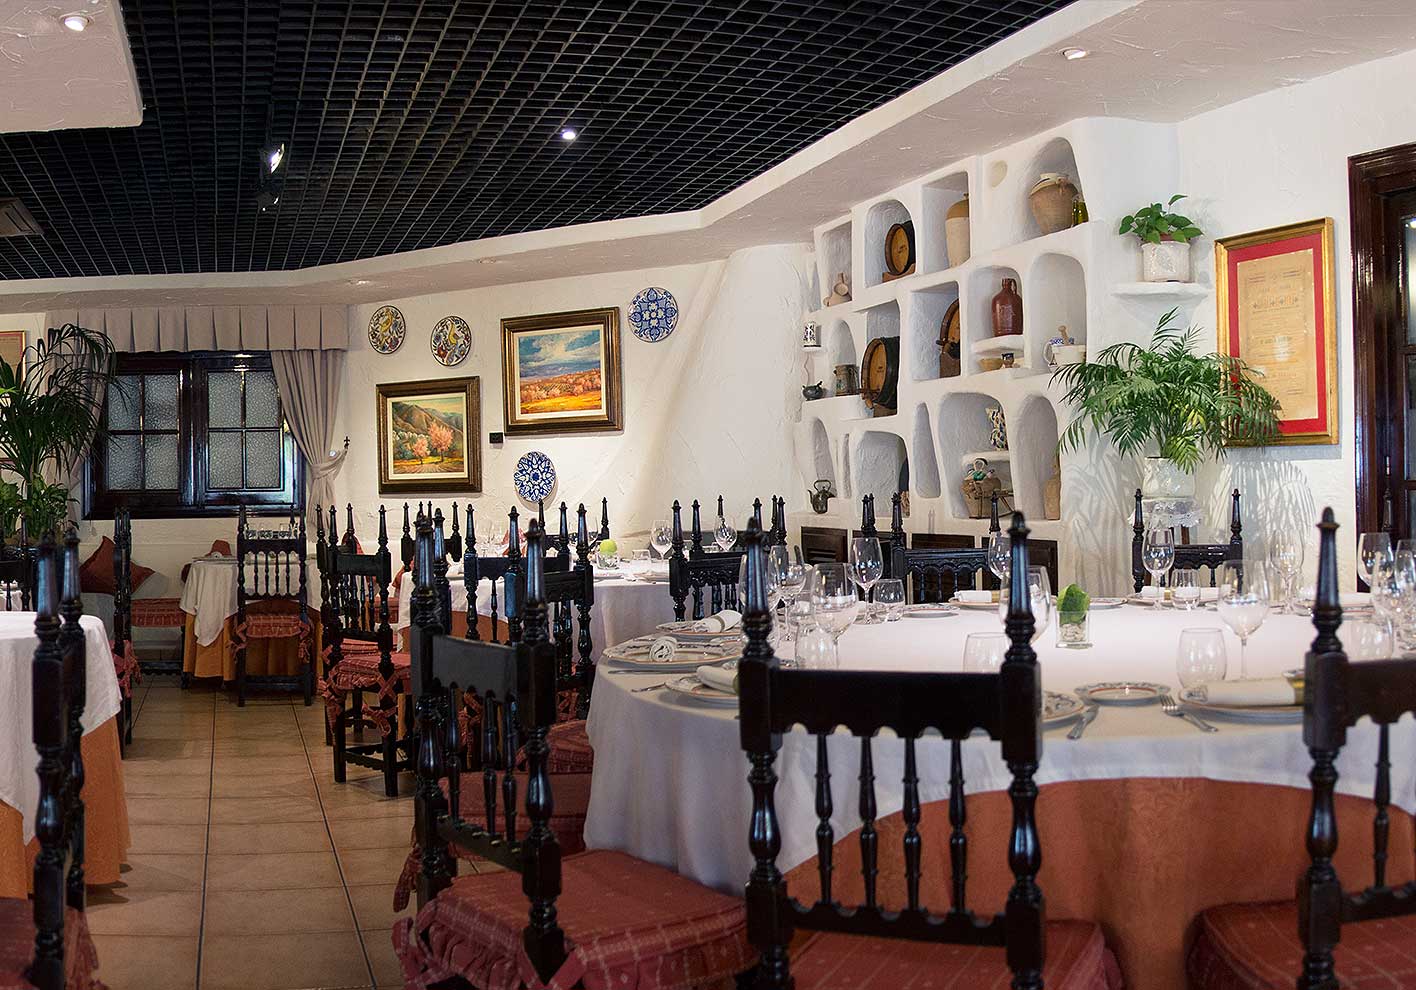 Main Dining Room 05 - Hotel Restaurante Terraza Carmona in Vera, Almeria